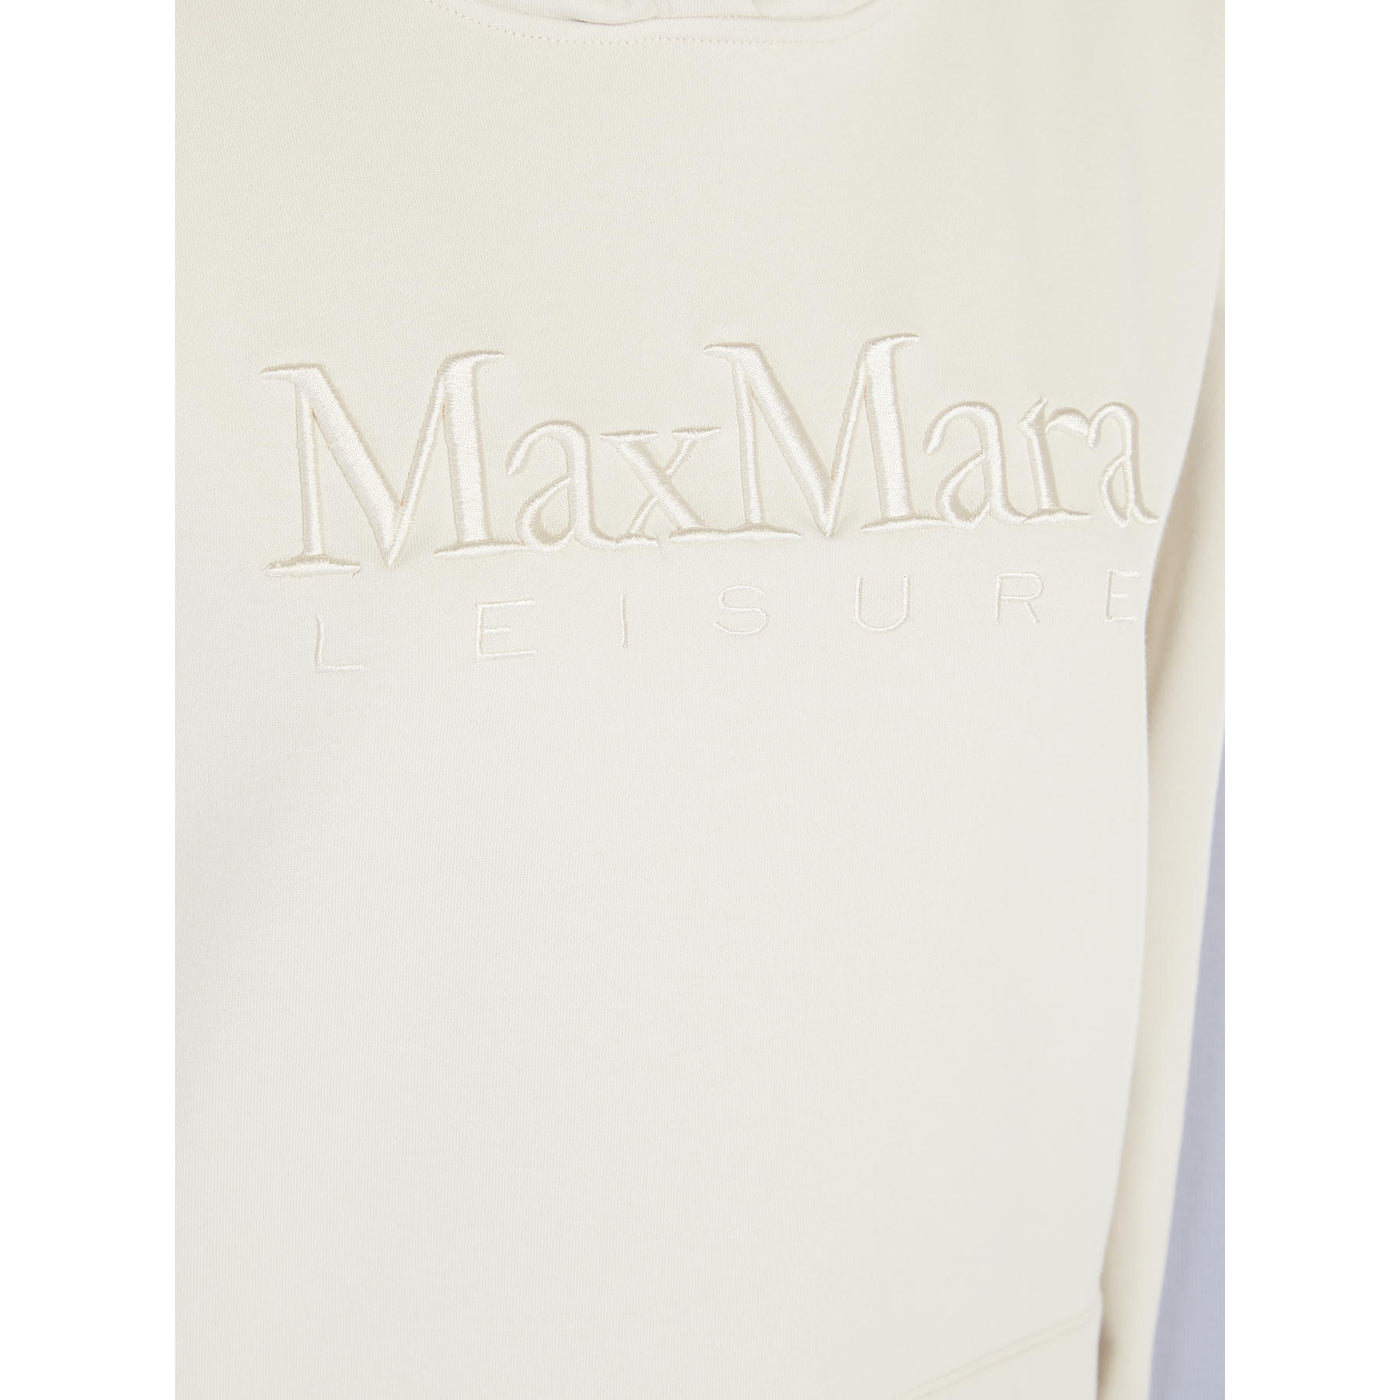 Max Mara Leisure Stadio Jersey Hooded Sweatshirt